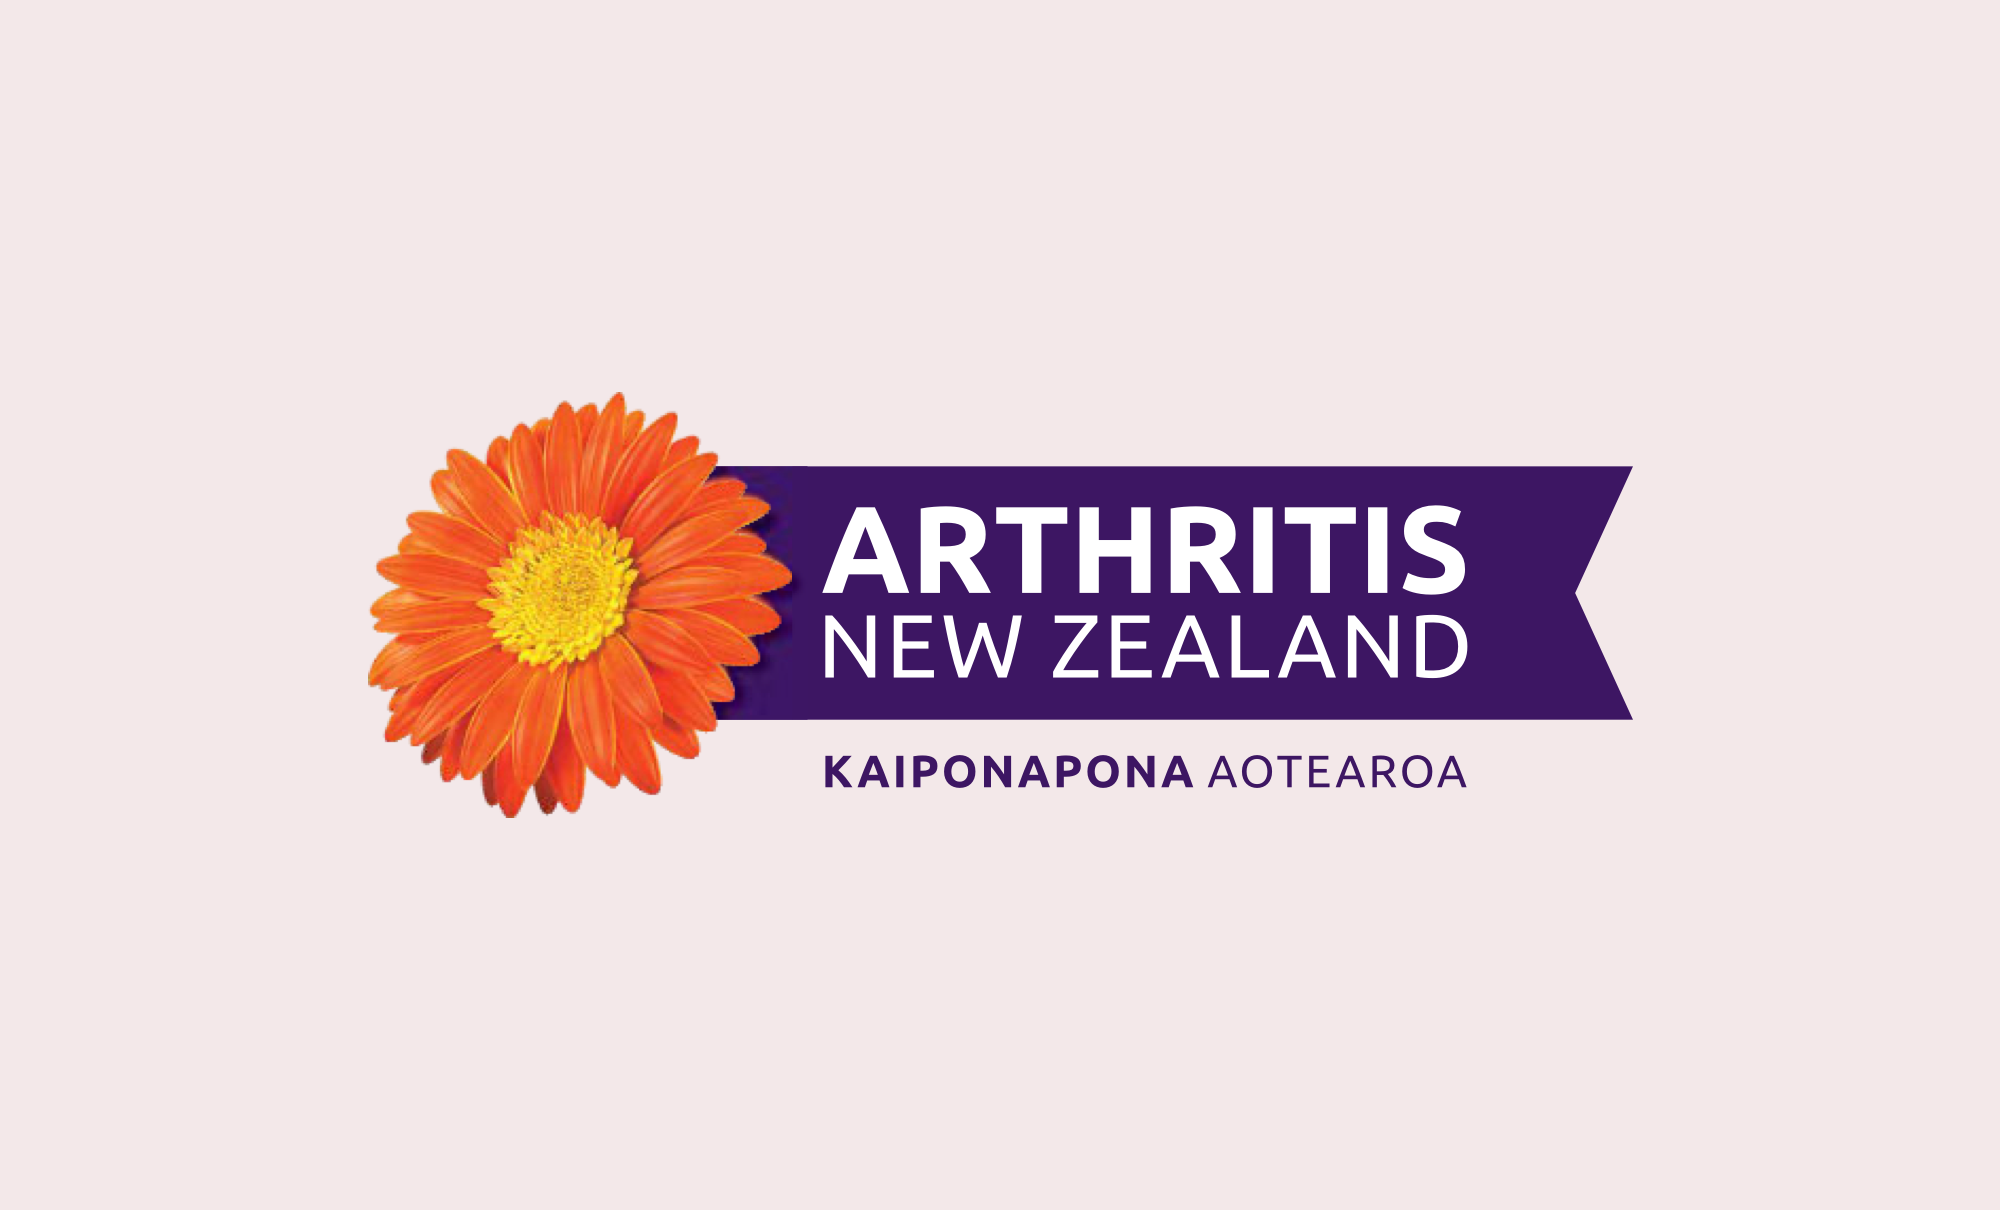 Arthritis New Zealand maximises access with online courses